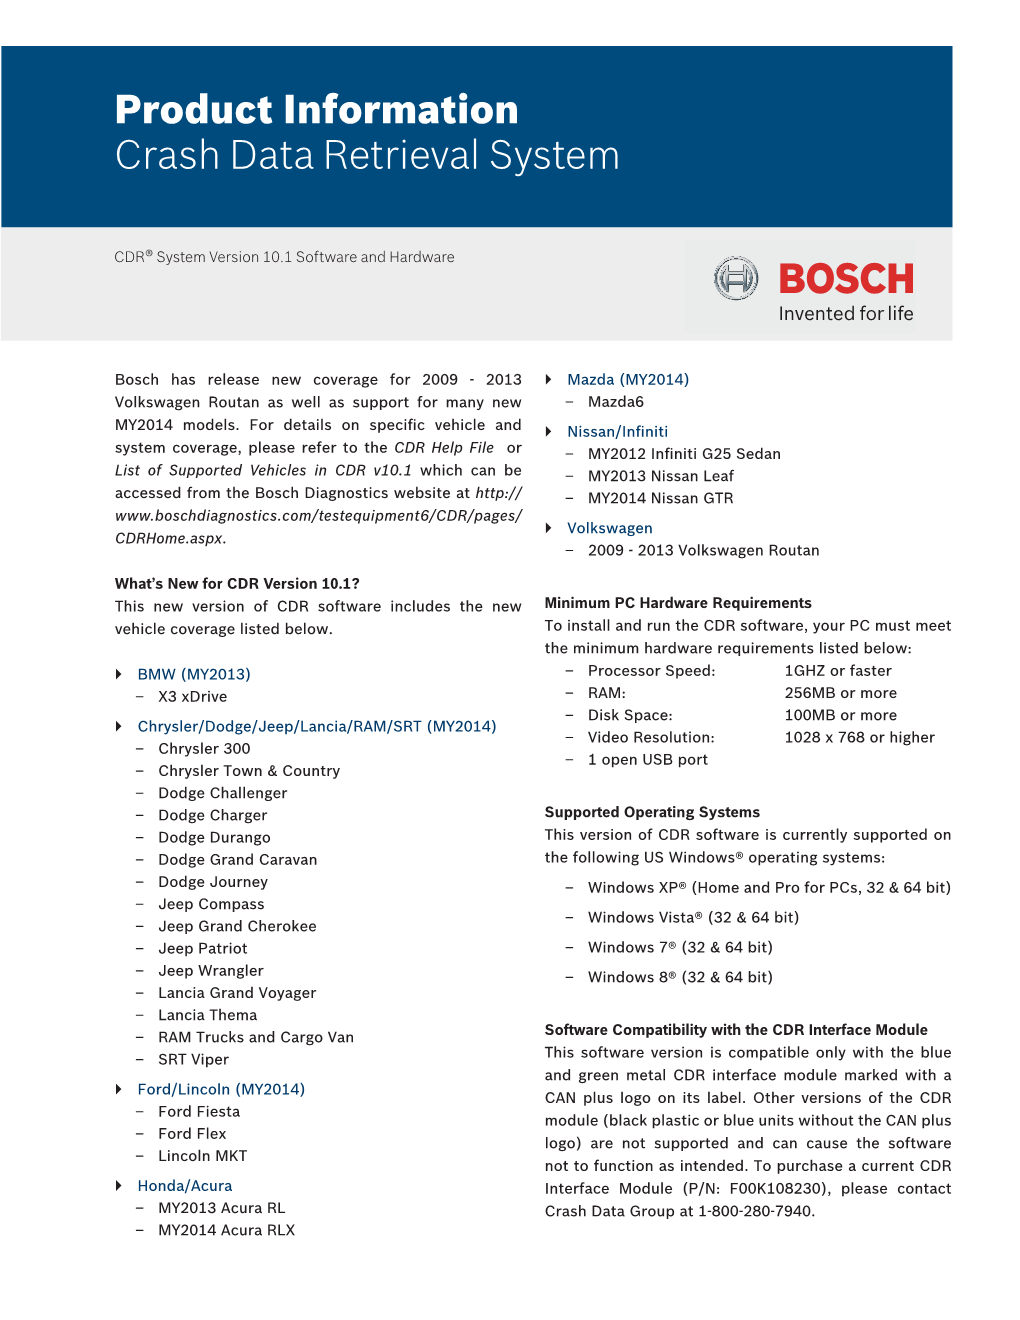 Product Information Crash Data Retrieval System